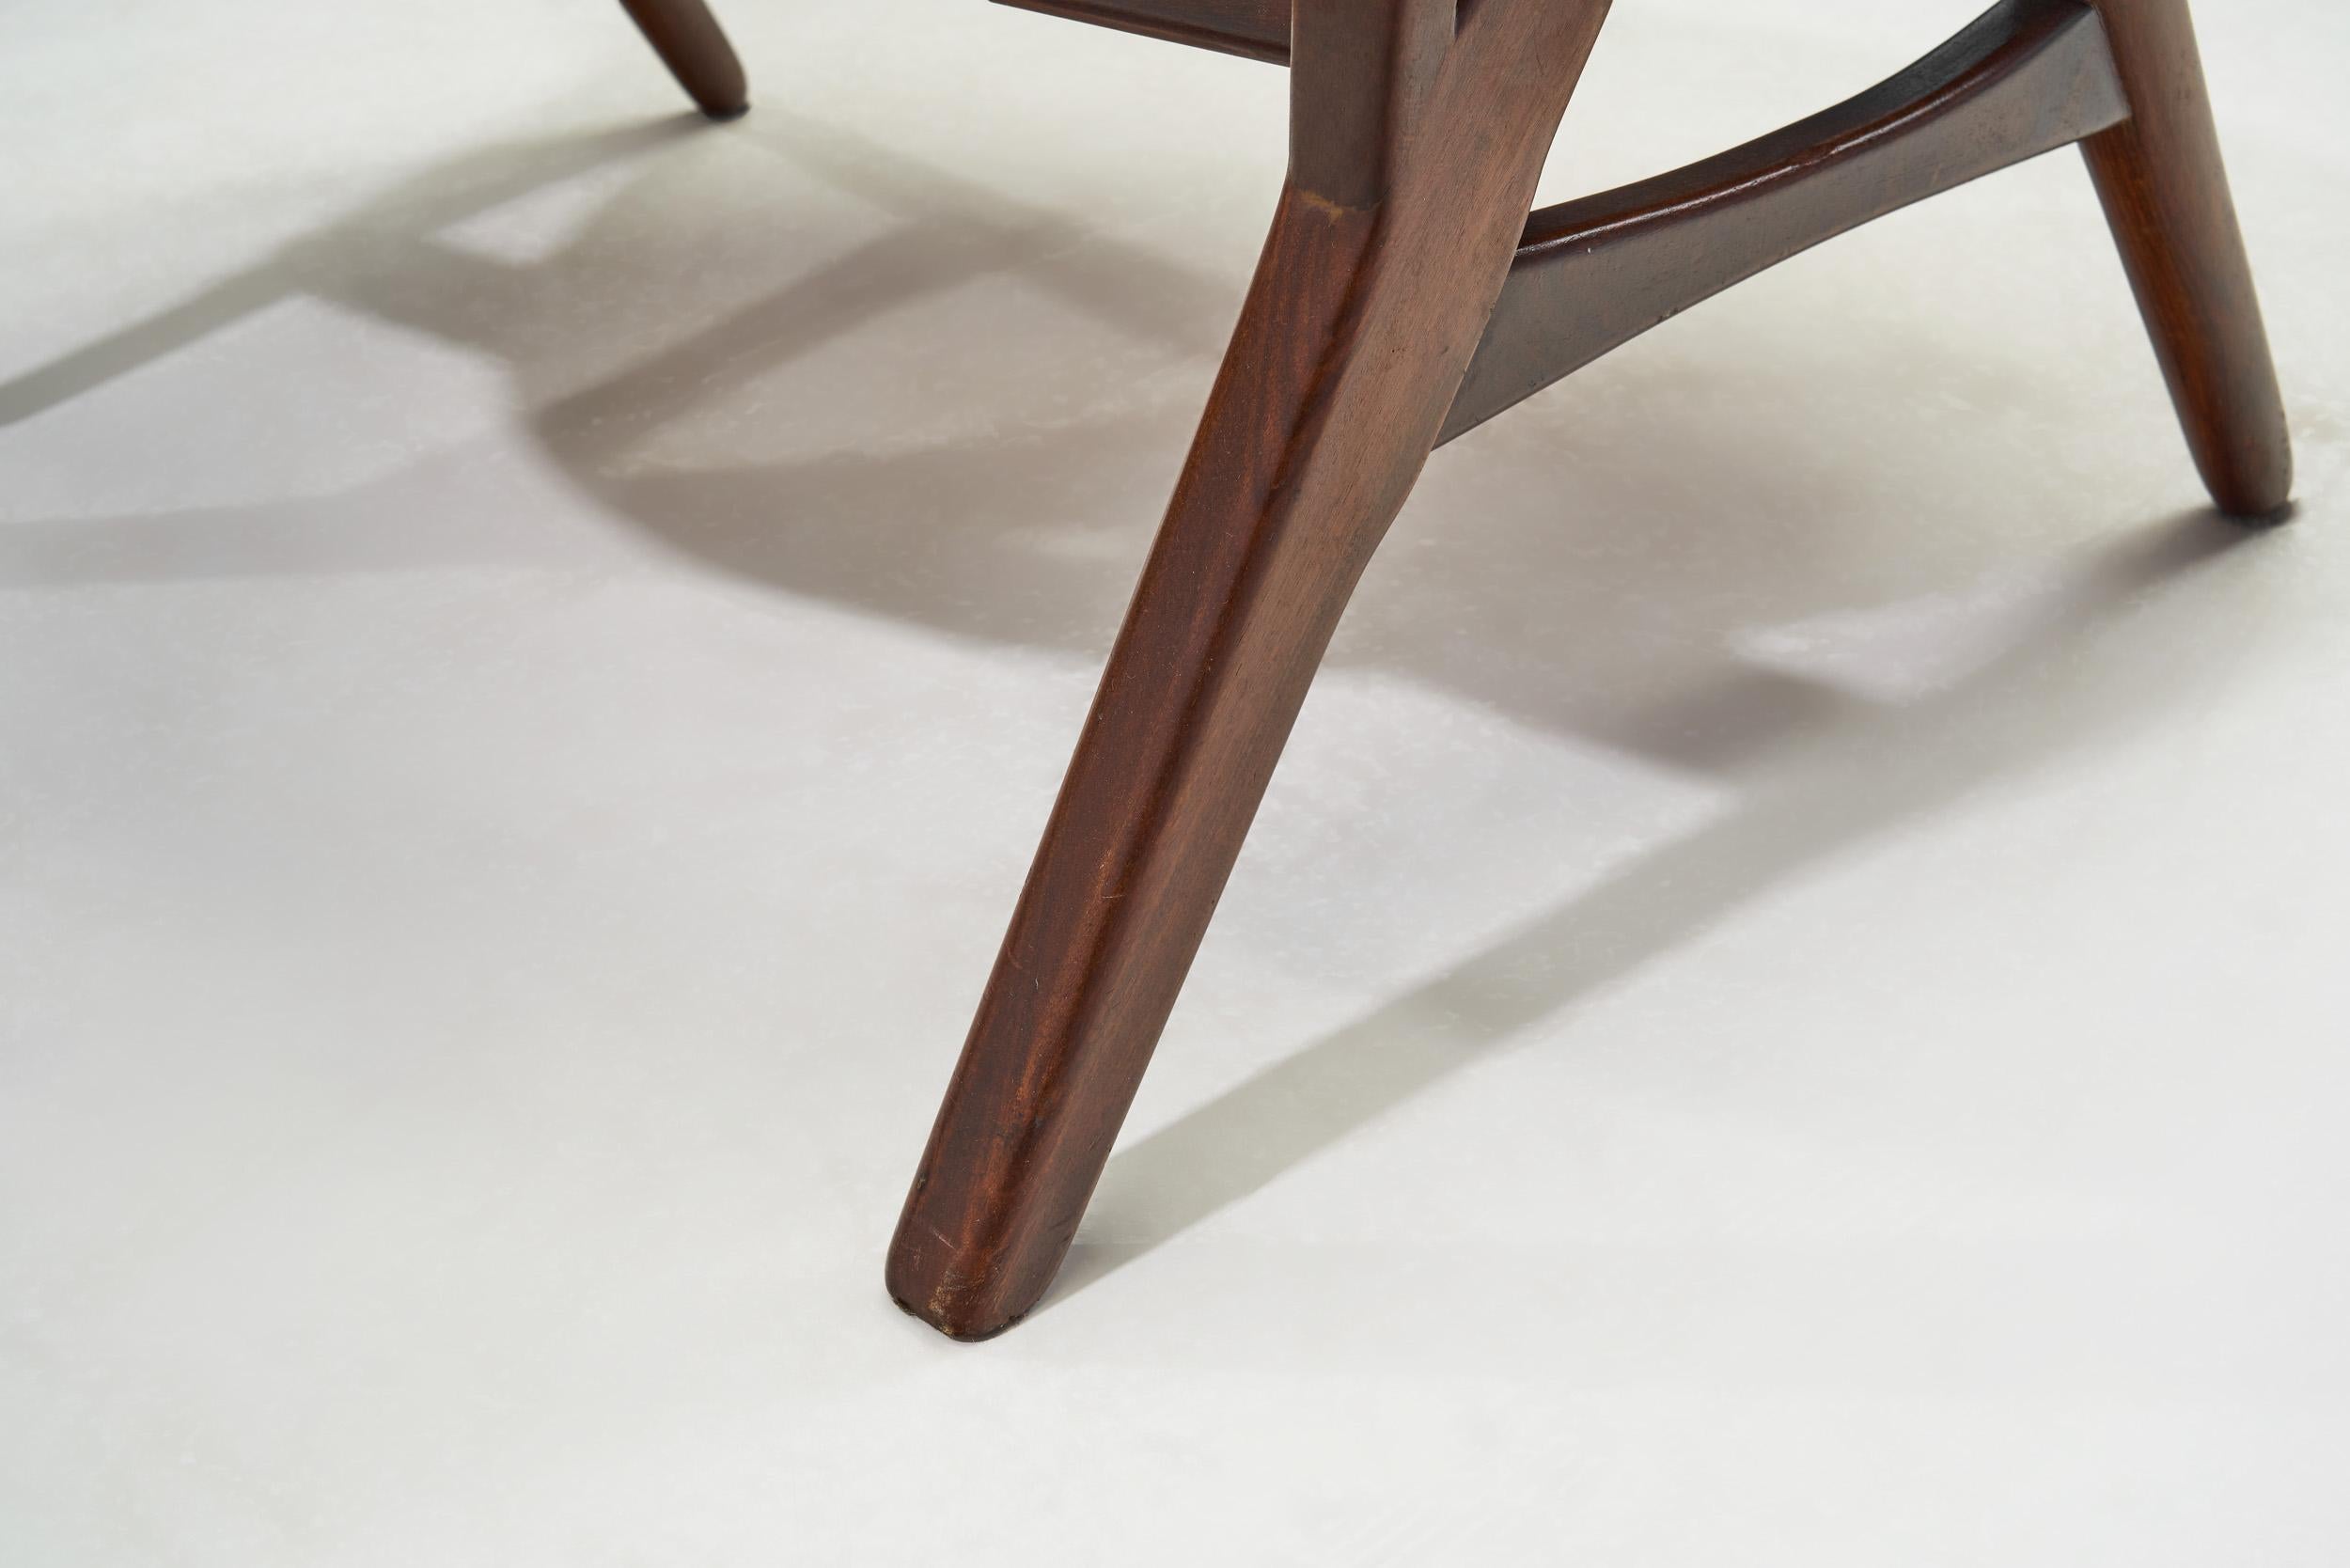 Sculptural Danish Mid-Century Modern Chair, Denmark ca 1960s For Sale 9